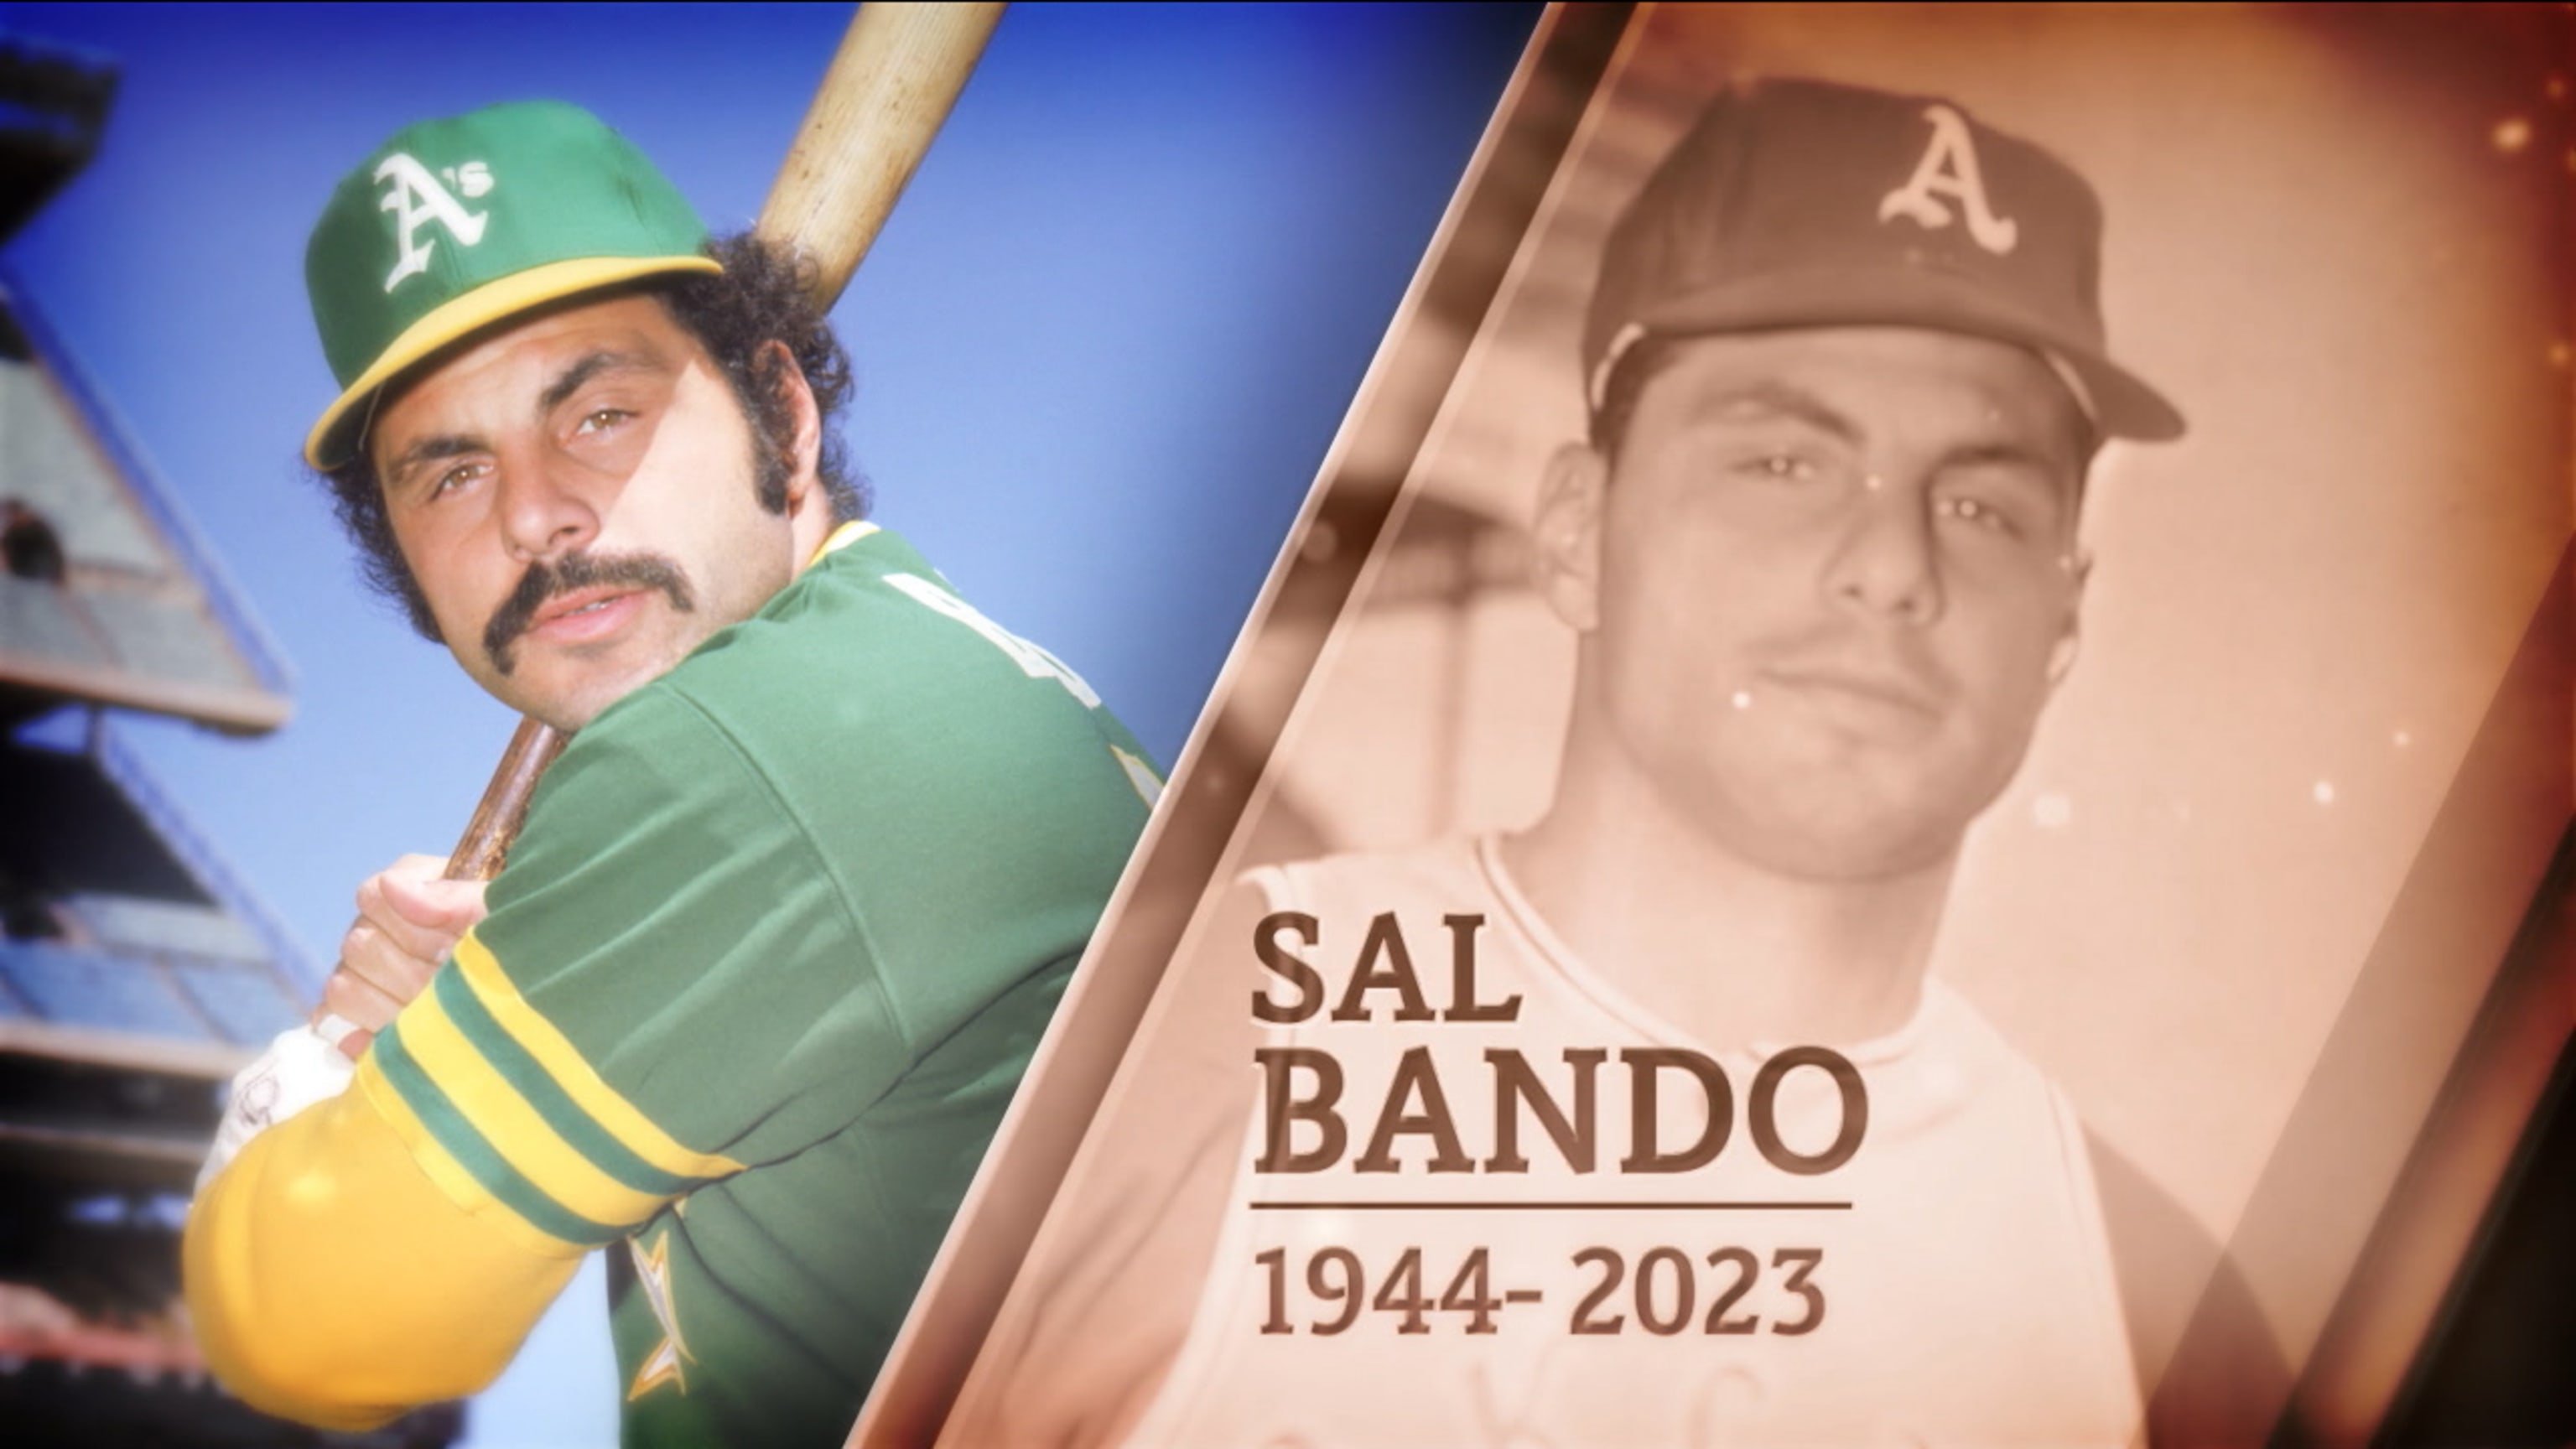 Remembering Sal Bando - Royals Review